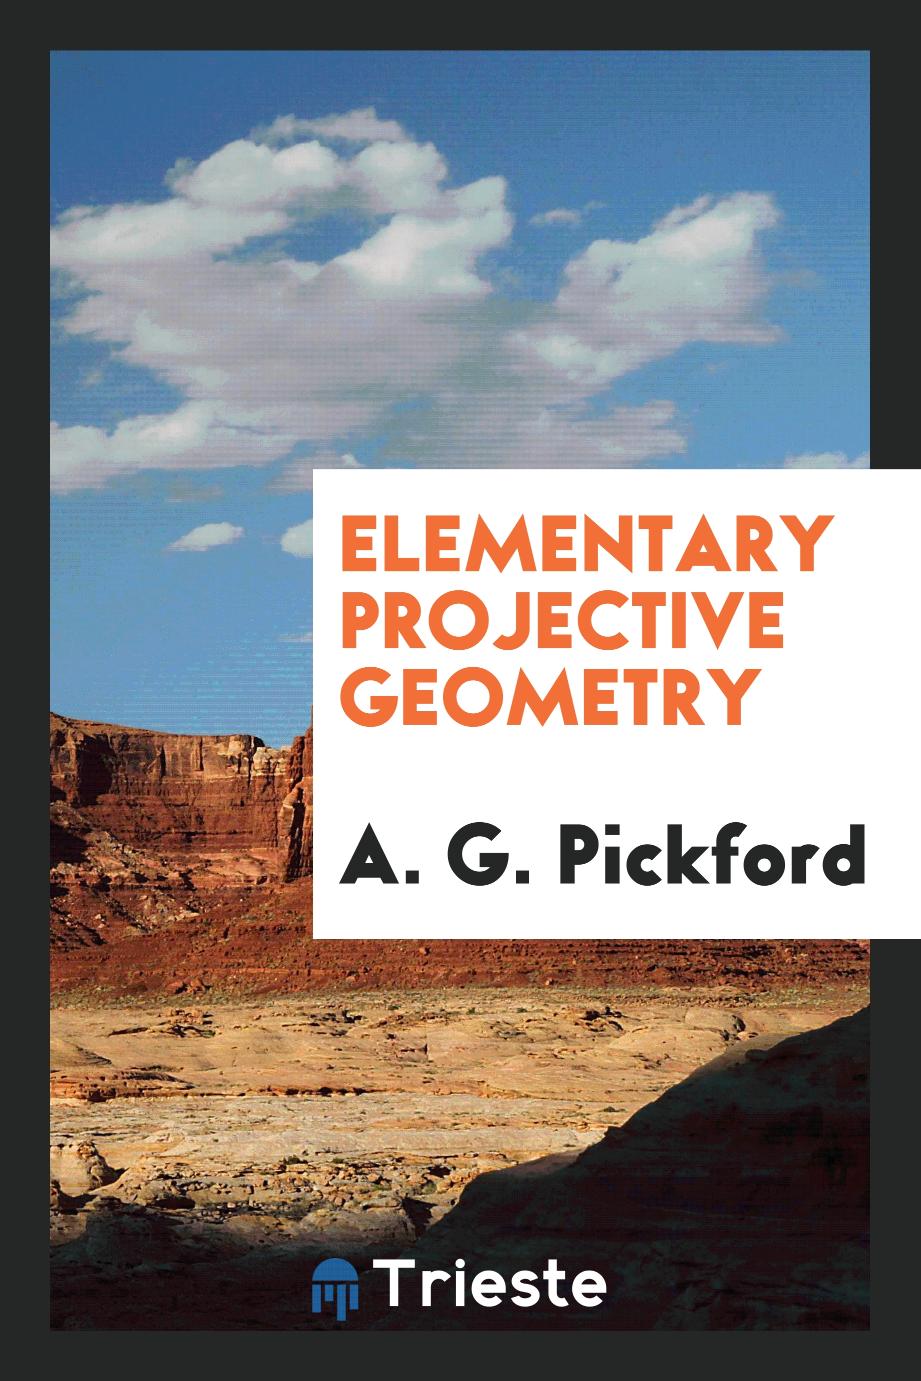 Elementary projective geometry